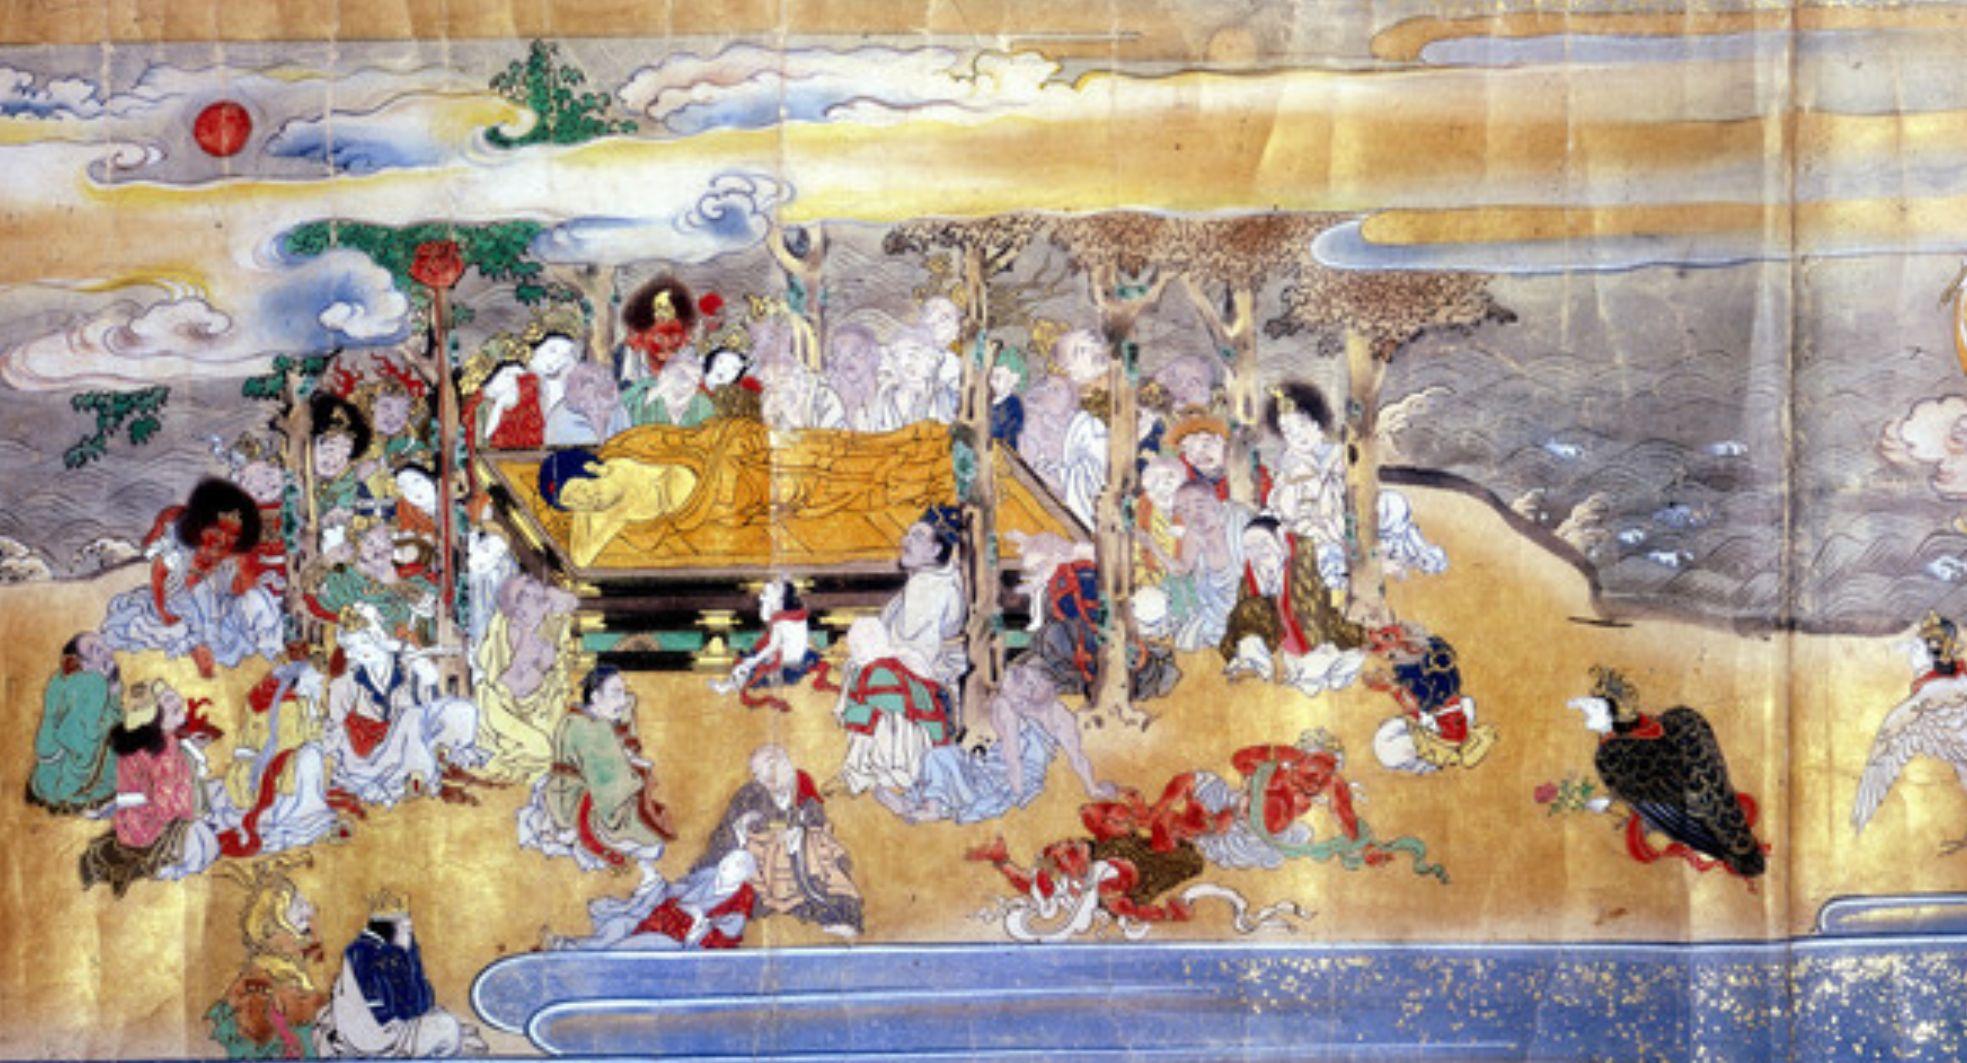 /// Illustration du prince Siddhartha Gautama sur son lit de mort ///